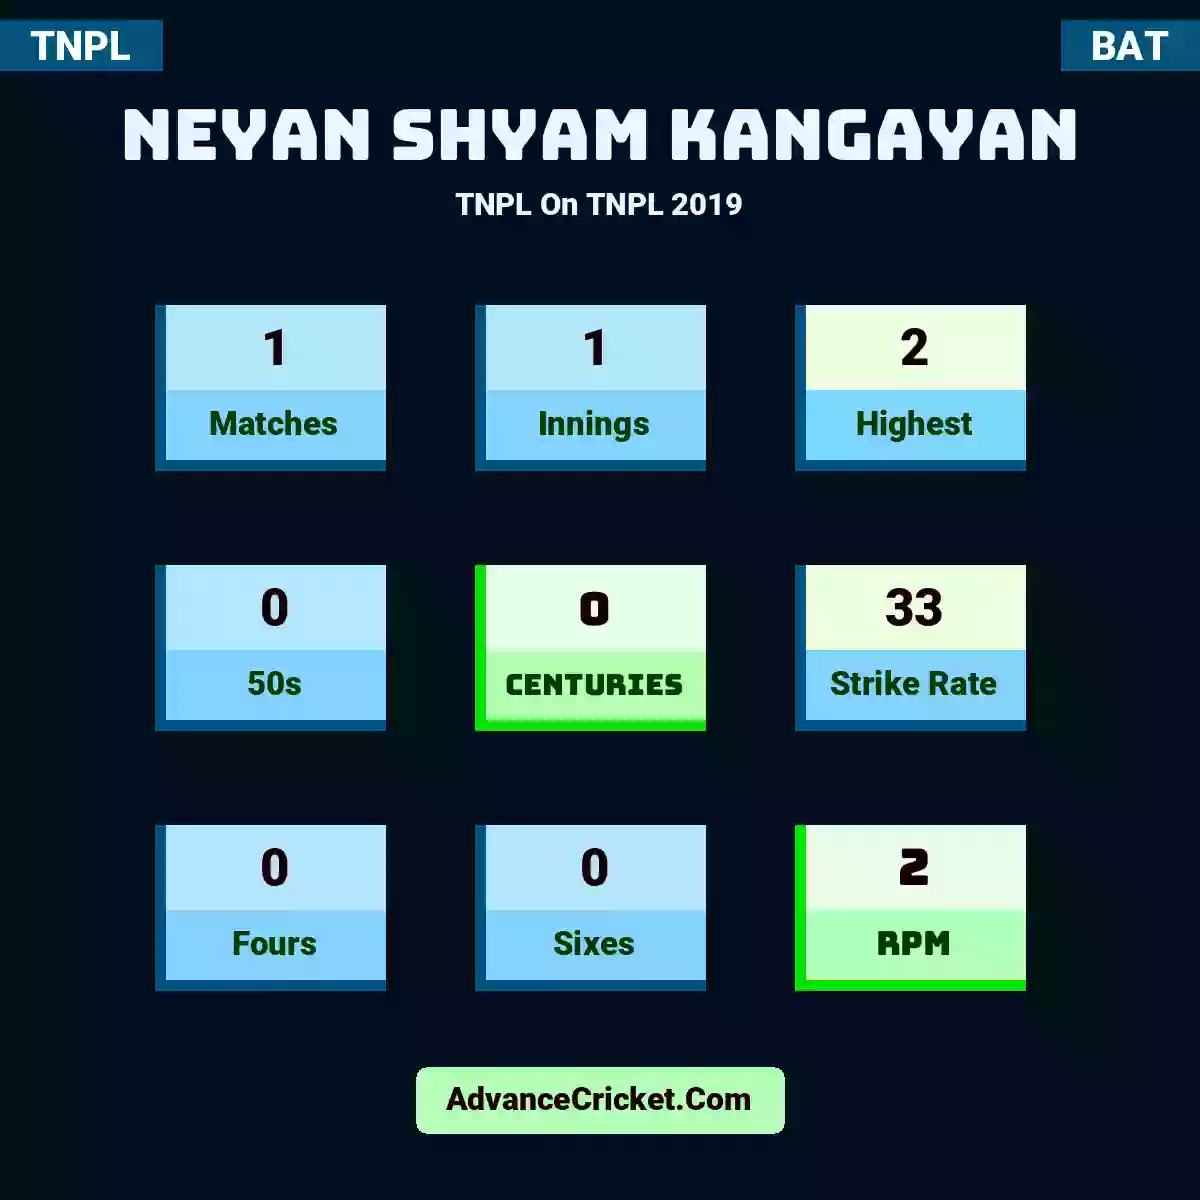 Neyan Shyam Kangayan TNPL  On TNPL 2019, Neyan Shyam Kangayan played 1 matches, scored 2 runs as highest, 0 half-centuries, and 0 centuries, with a strike rate of 33. N.Kangayan hit 0 fours and 0 sixes, with an RPM of 2.